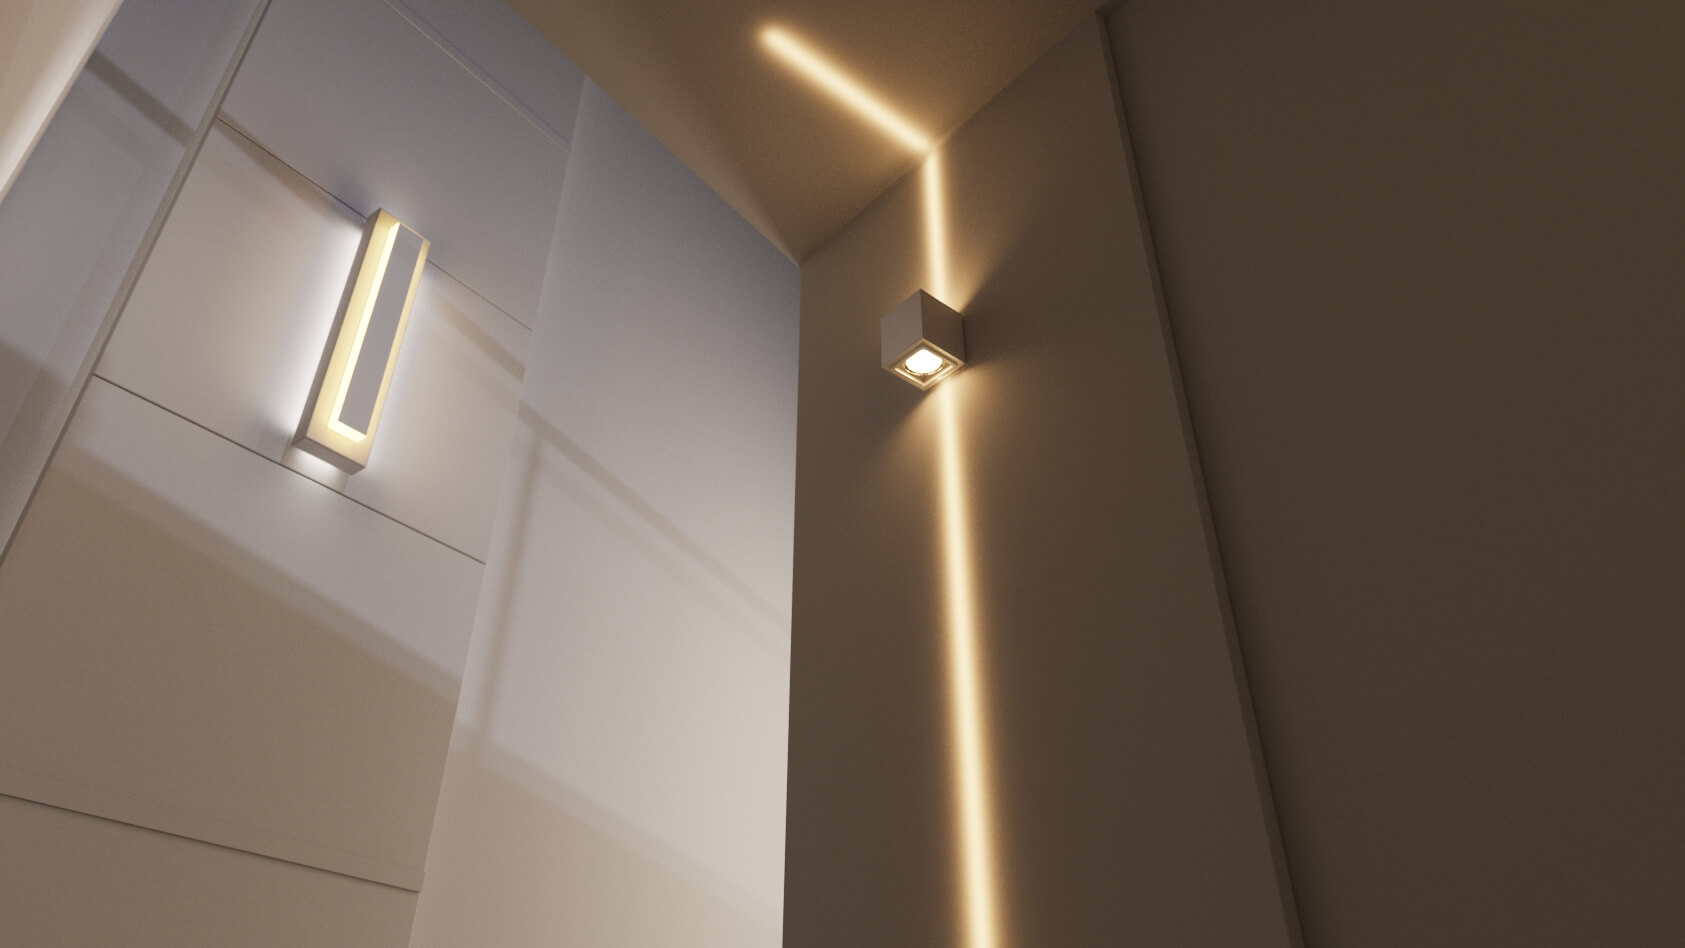 Corridor Lighting for Photorealistic 3D Animation